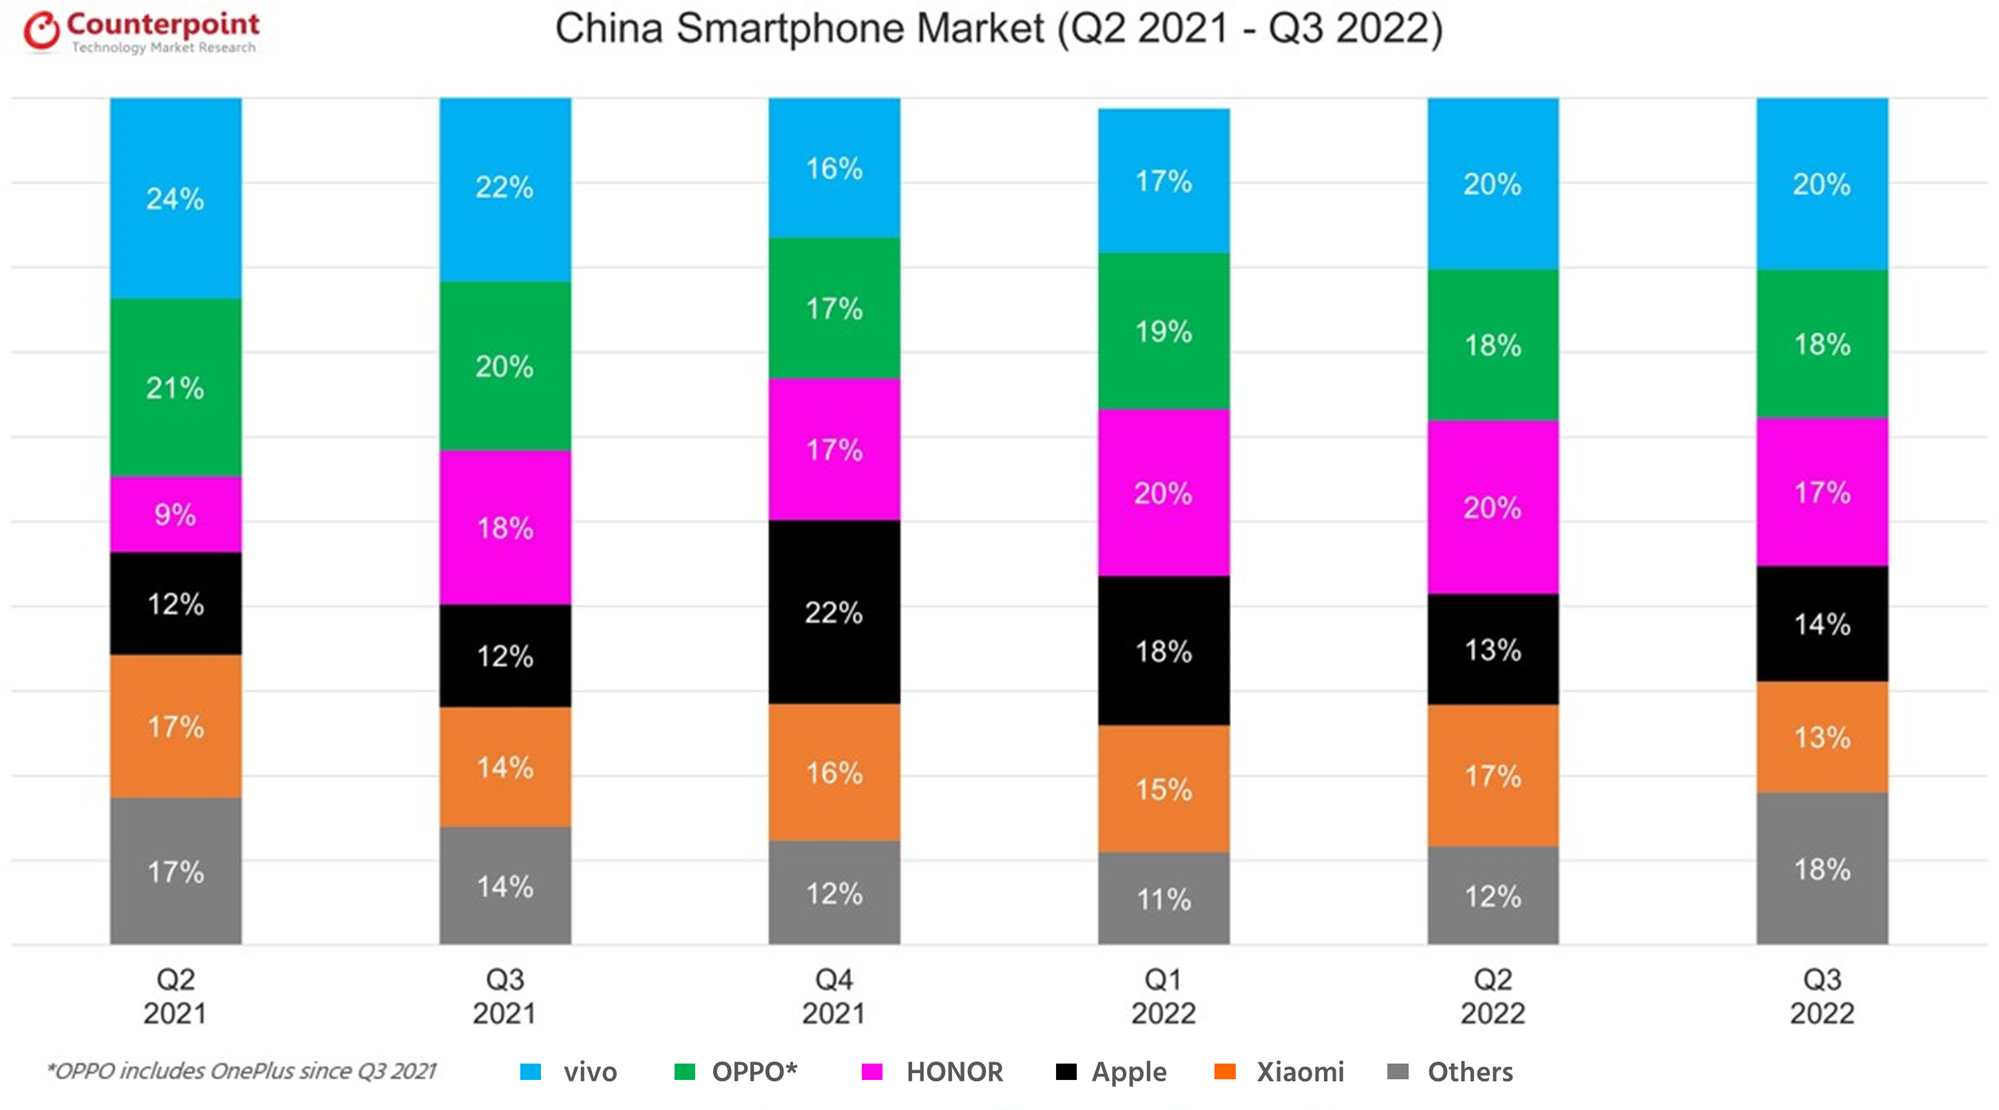 China Smartphone Market Q3 2022